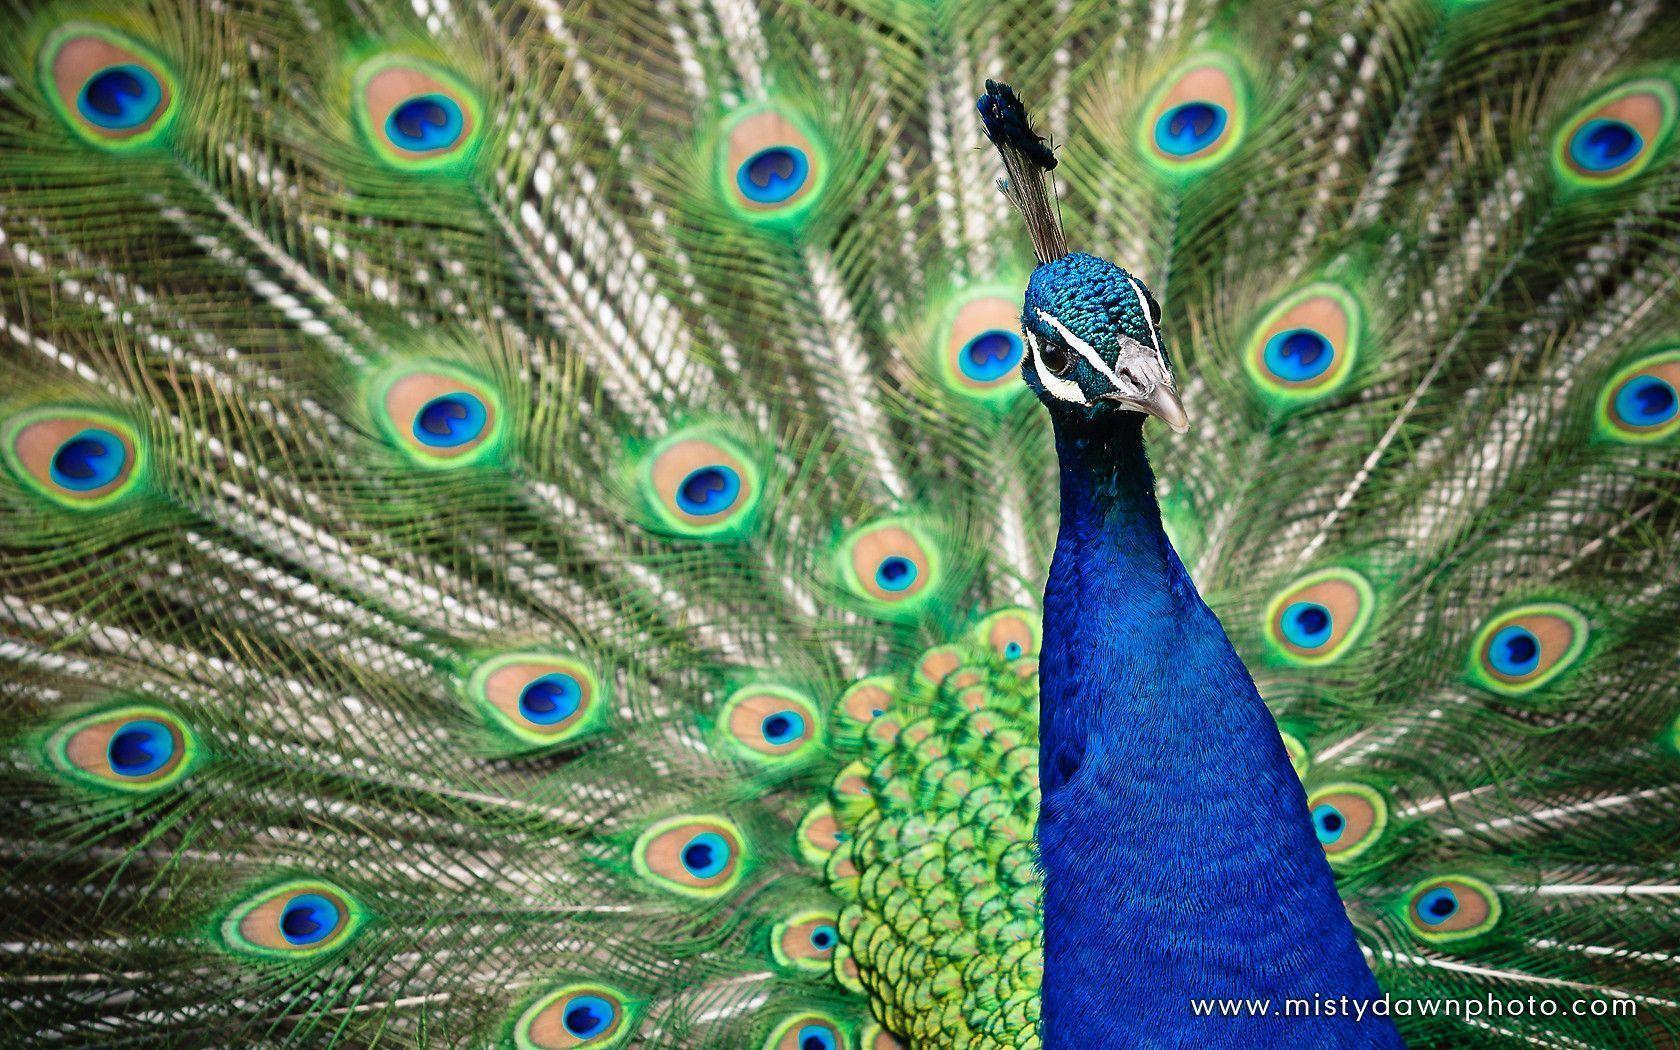 image For > Peacock Image For Desktop